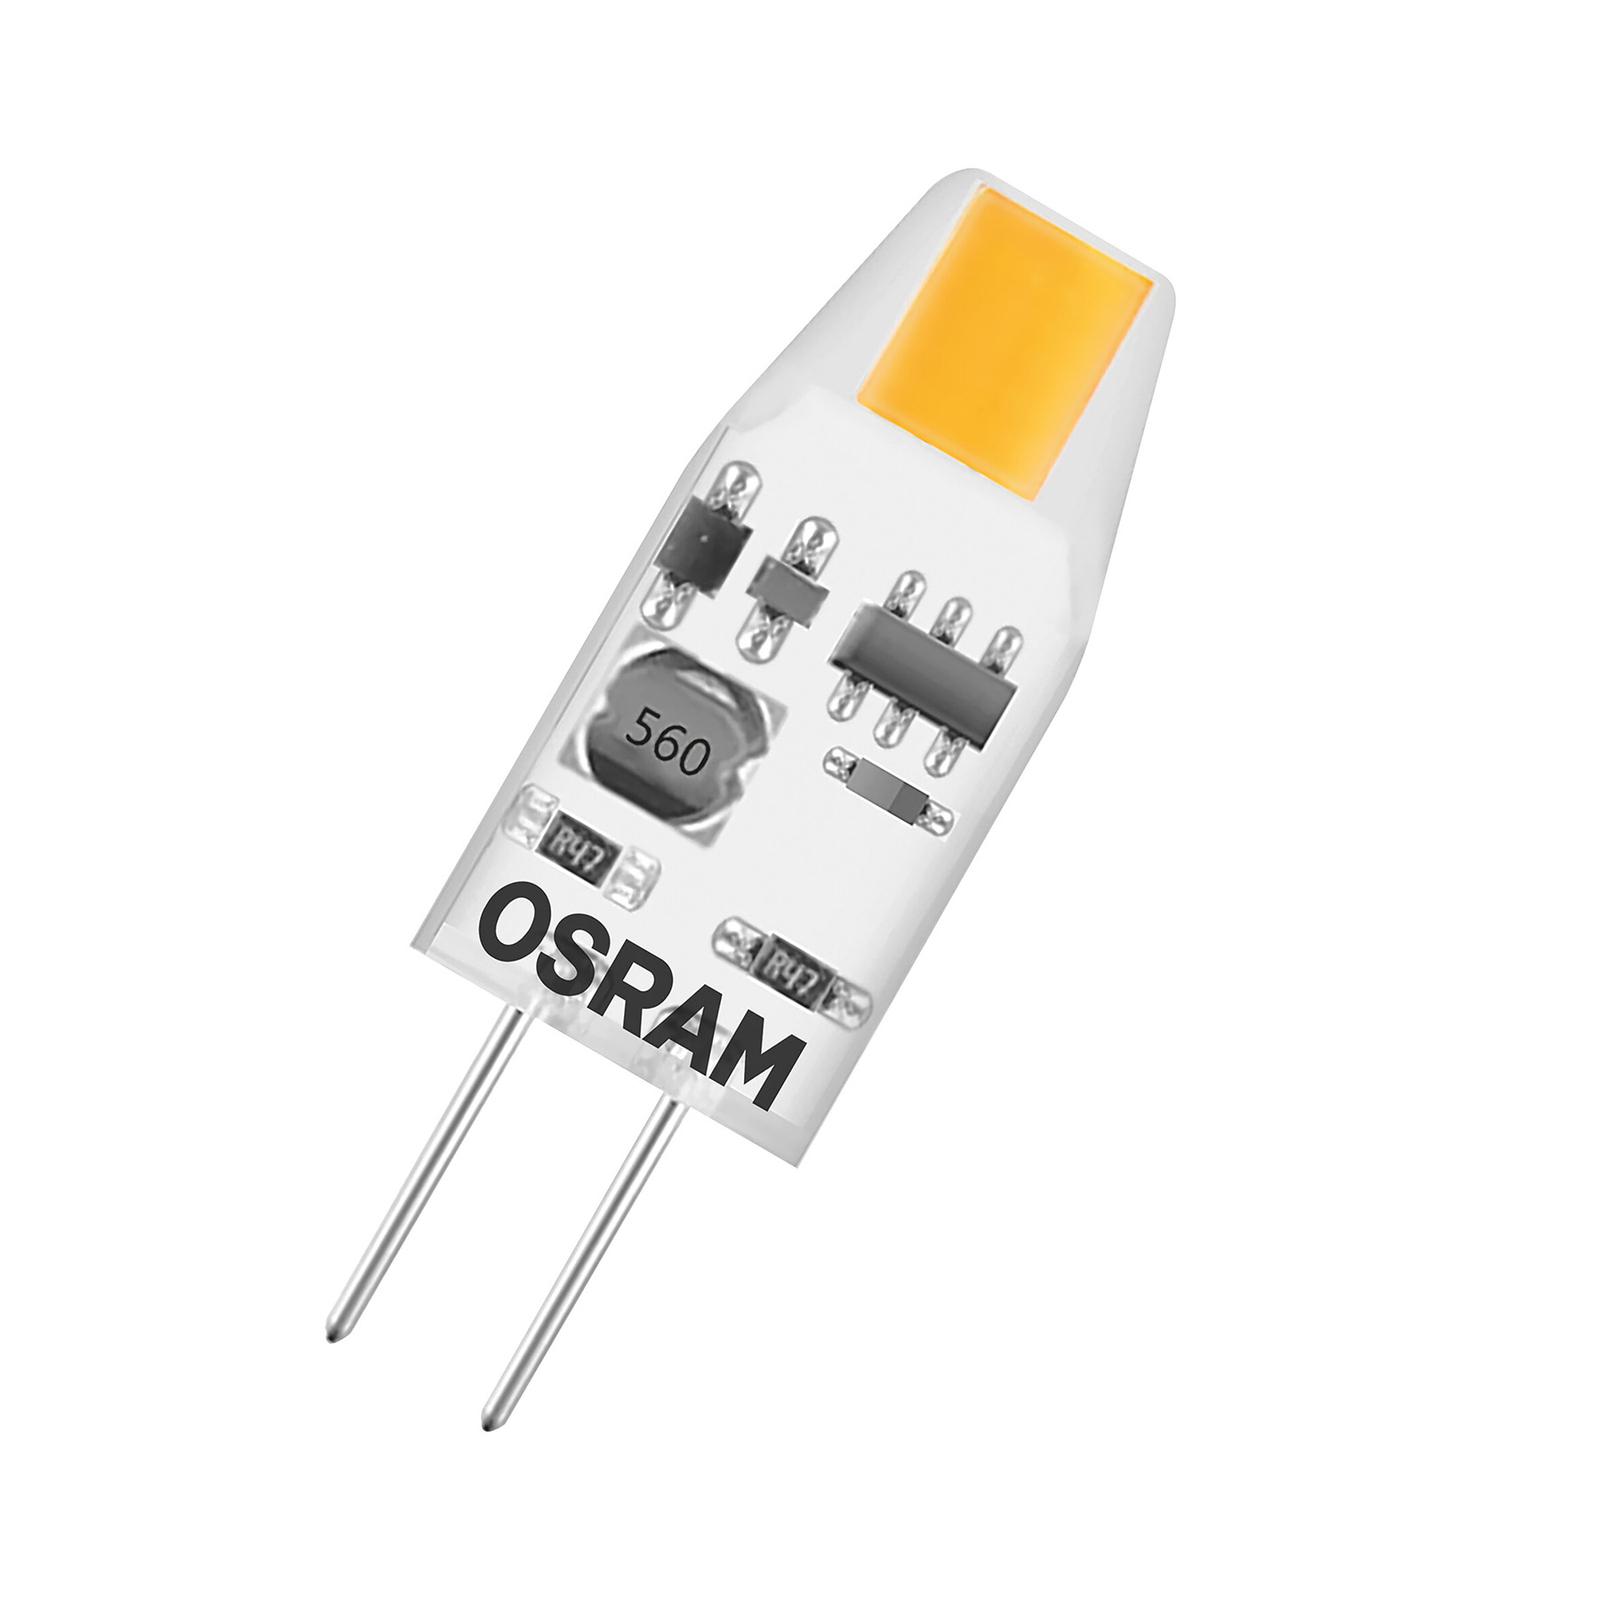 OSRAM PIN Micro LED broche G4 1 W 100 lm 2 700 K